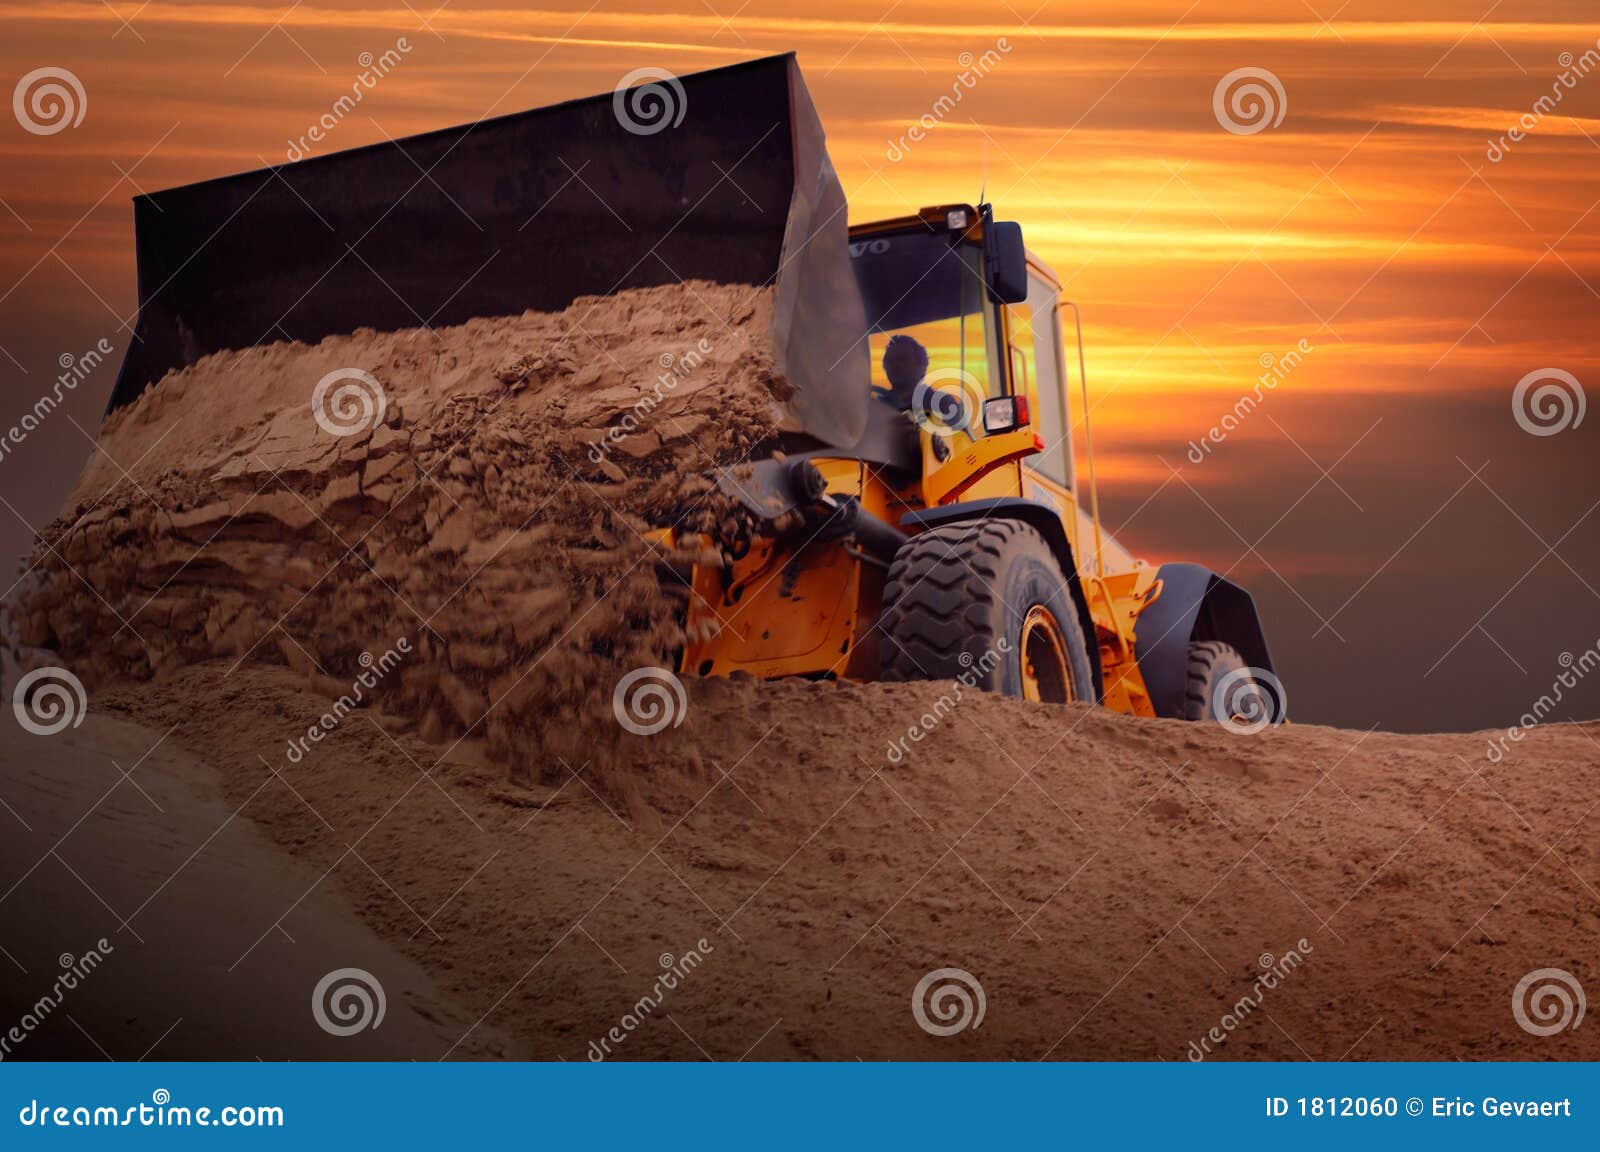 bulldozer at work